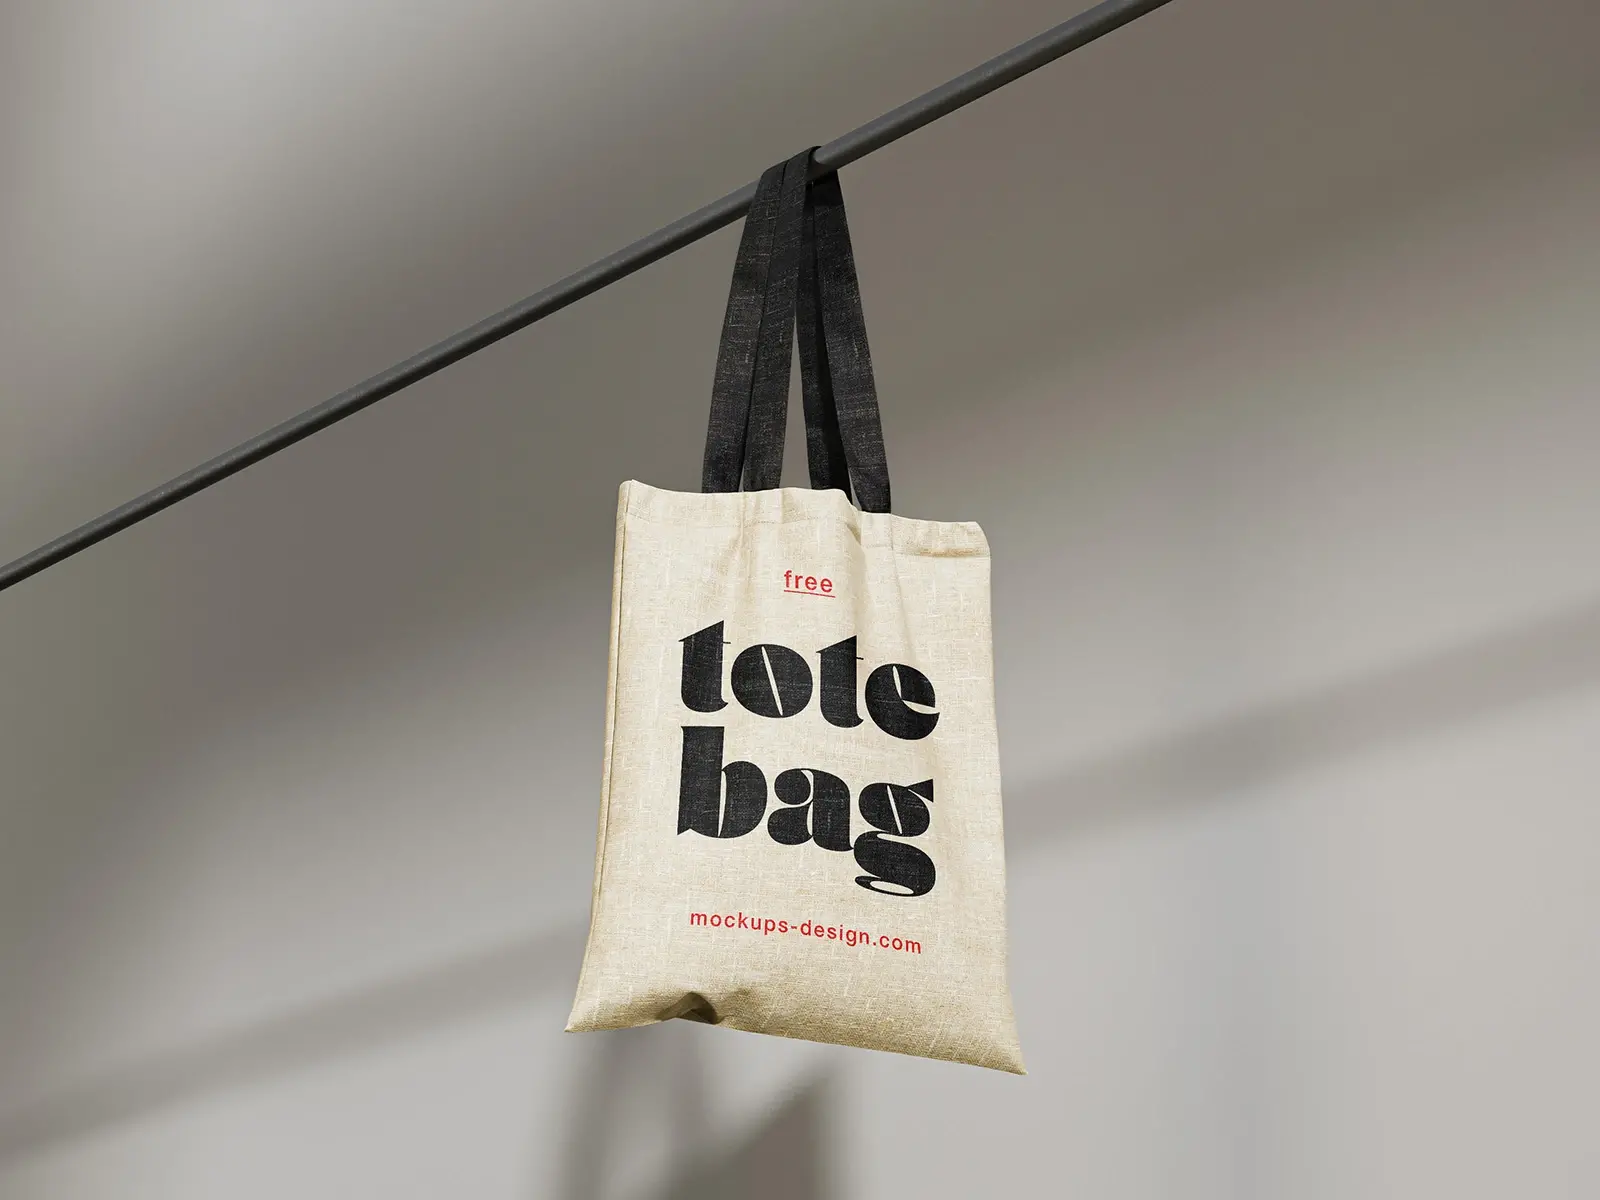 Blogduwebdesign ressources gratuites mockup tote bag suspendu